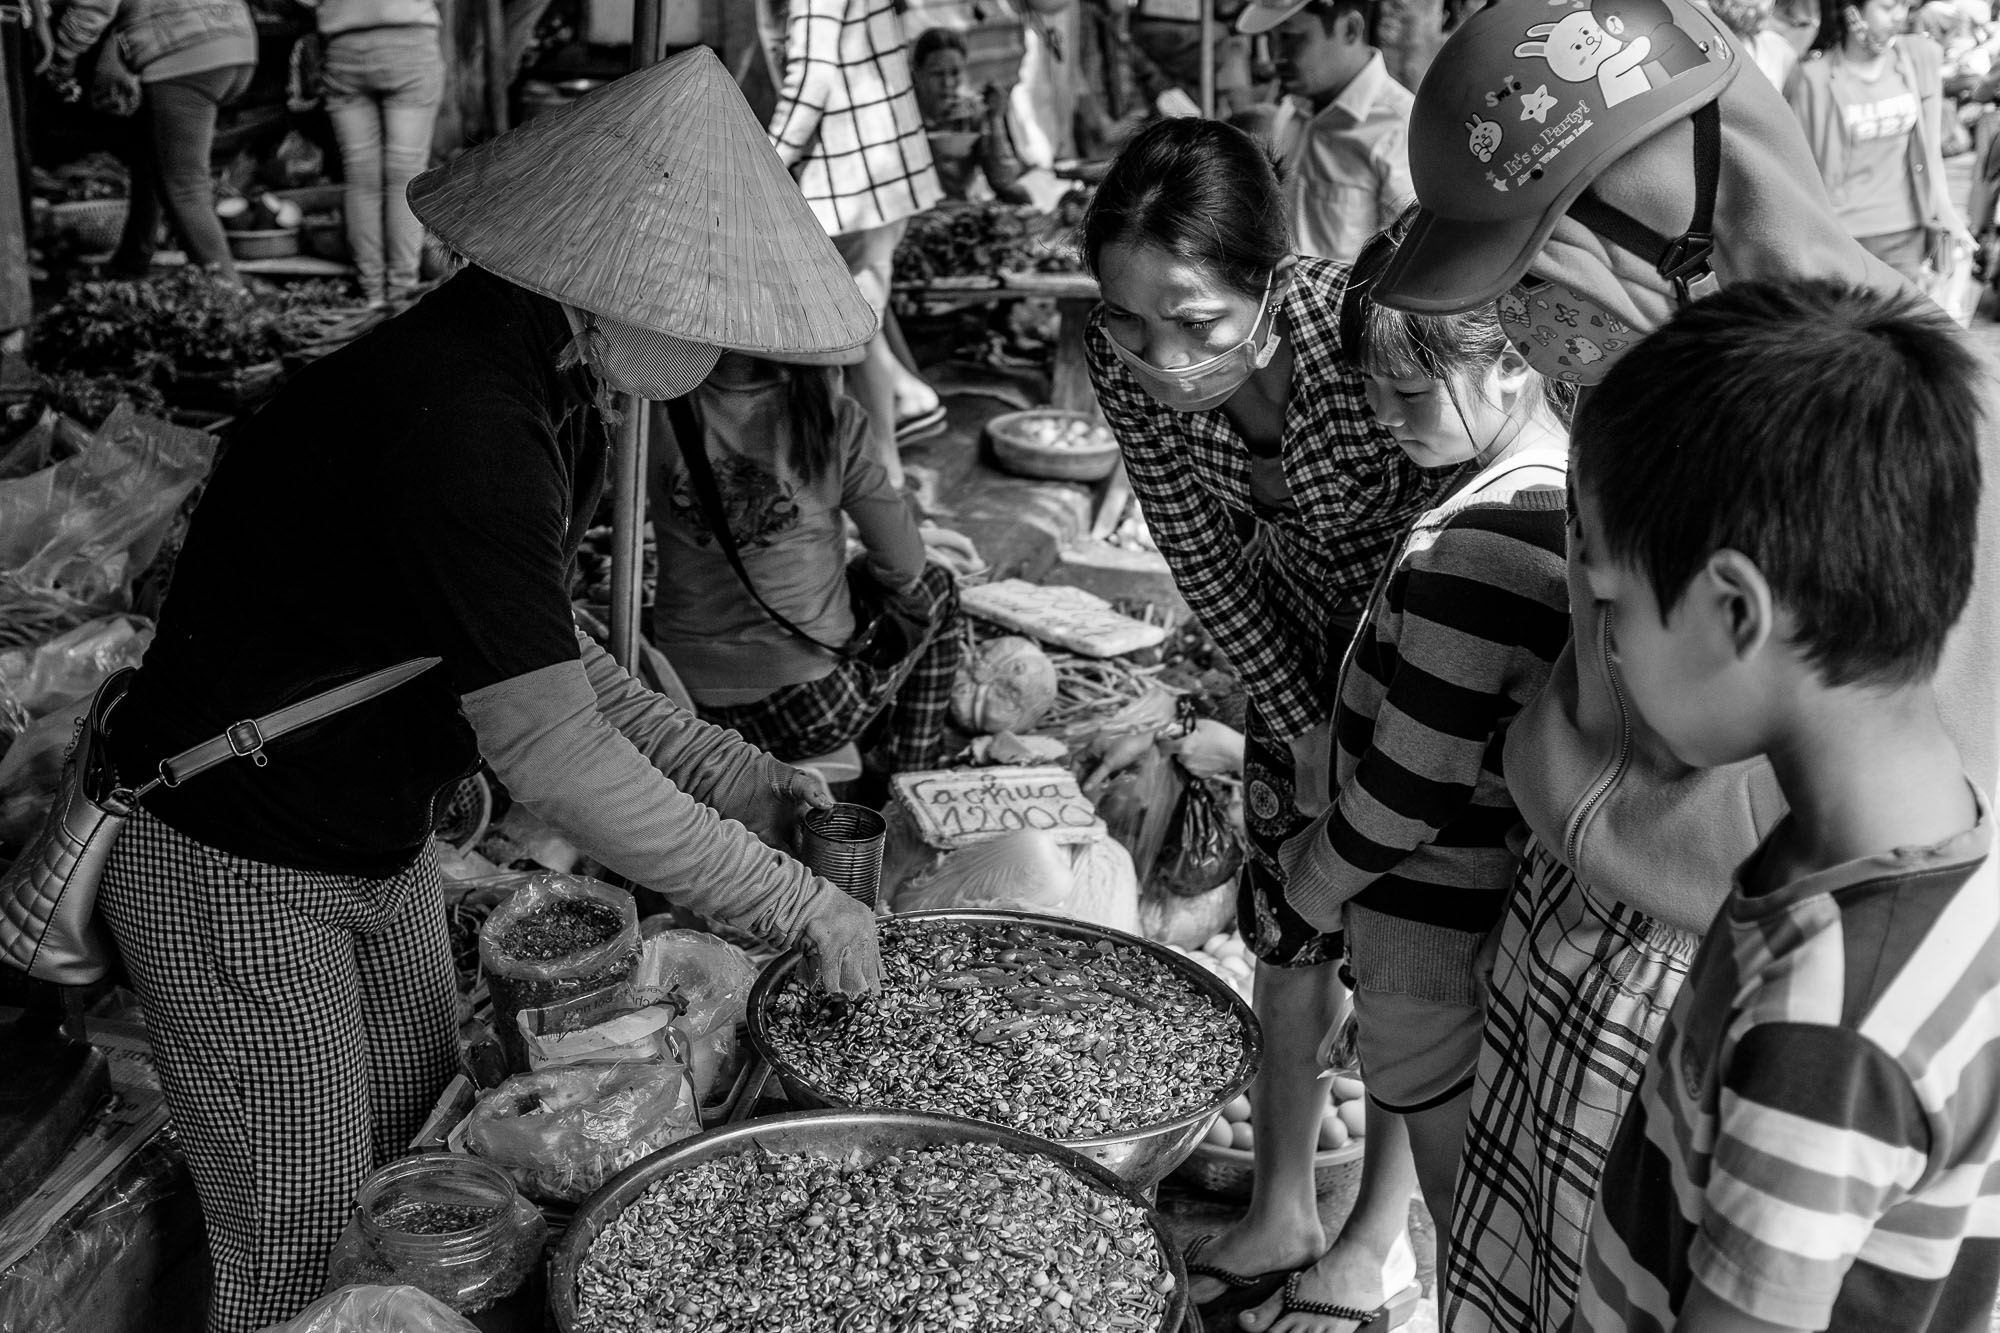 Customers examine the goods of a vendor